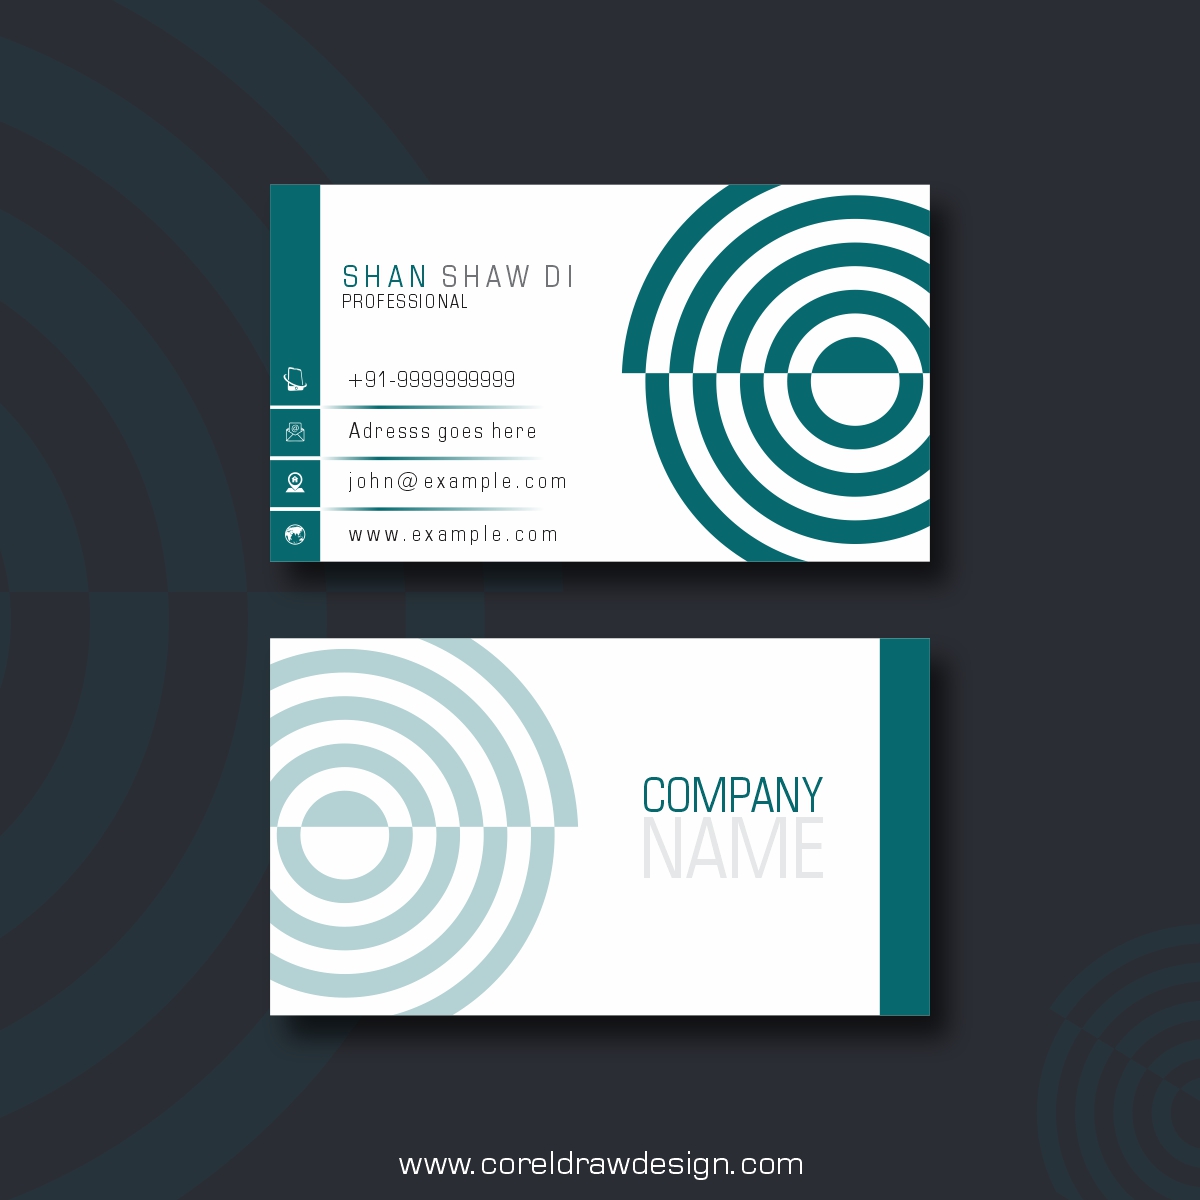 Elegant Editable Business Card Design